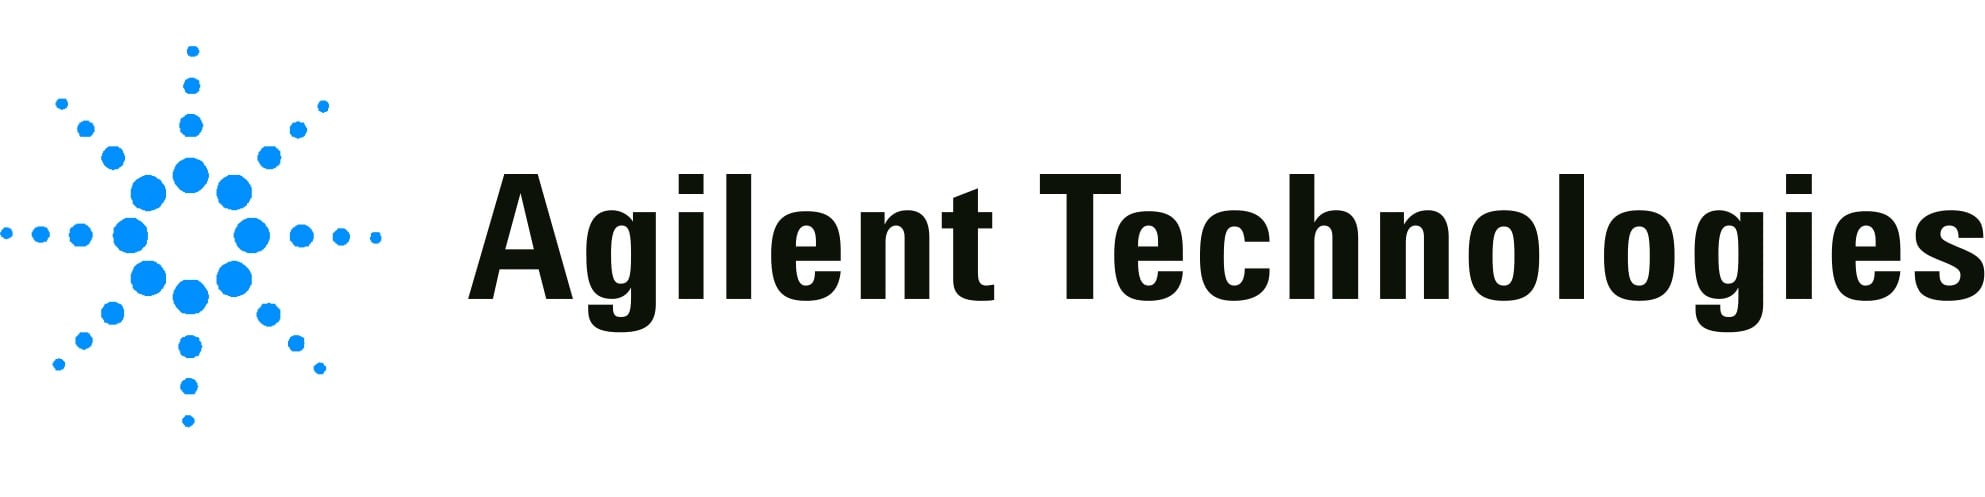 Company logo Agilent Technologies in colour